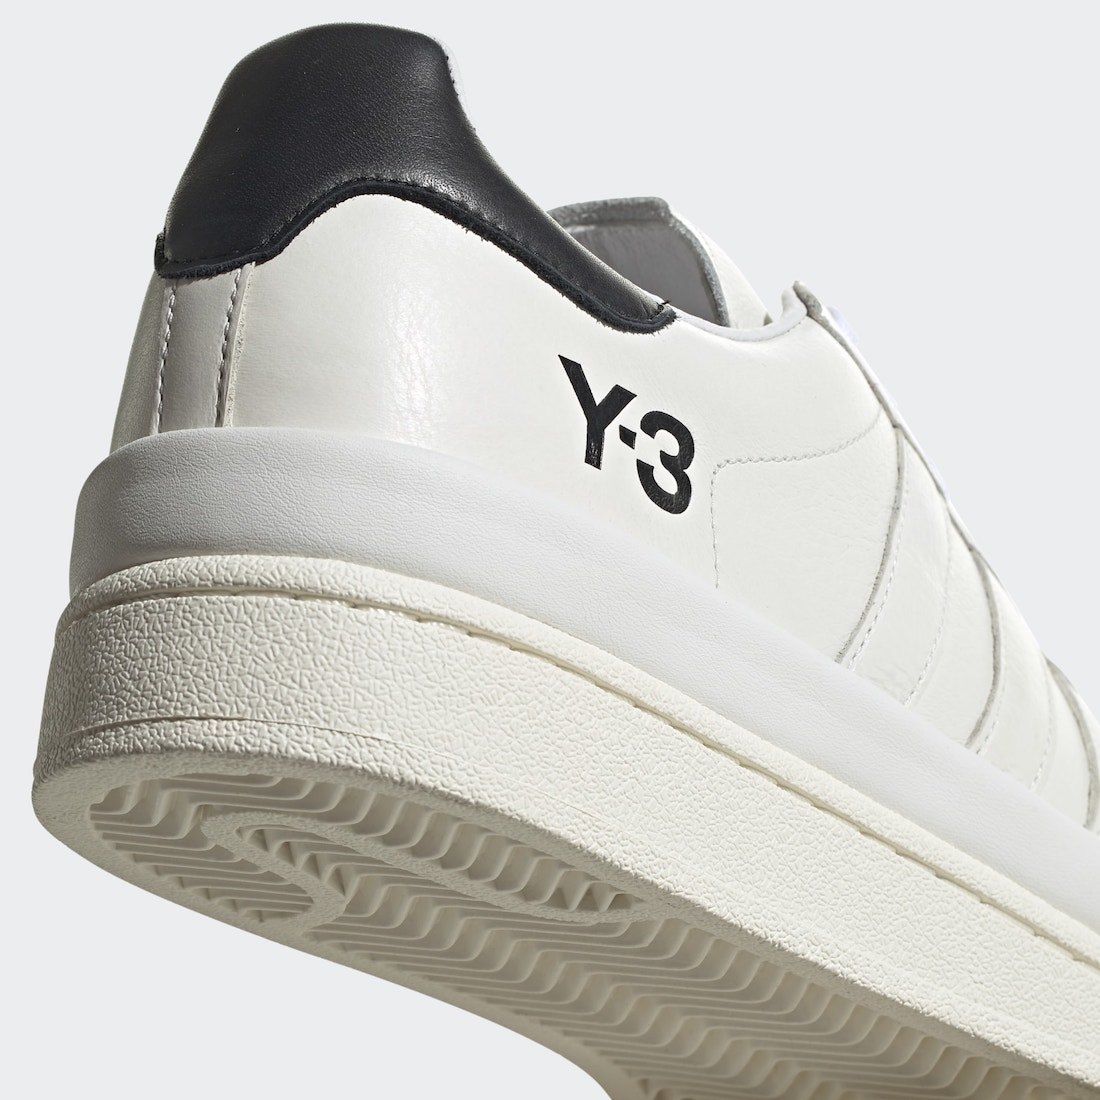 adidas Y-3 Hicho Core White S42846 Release Date